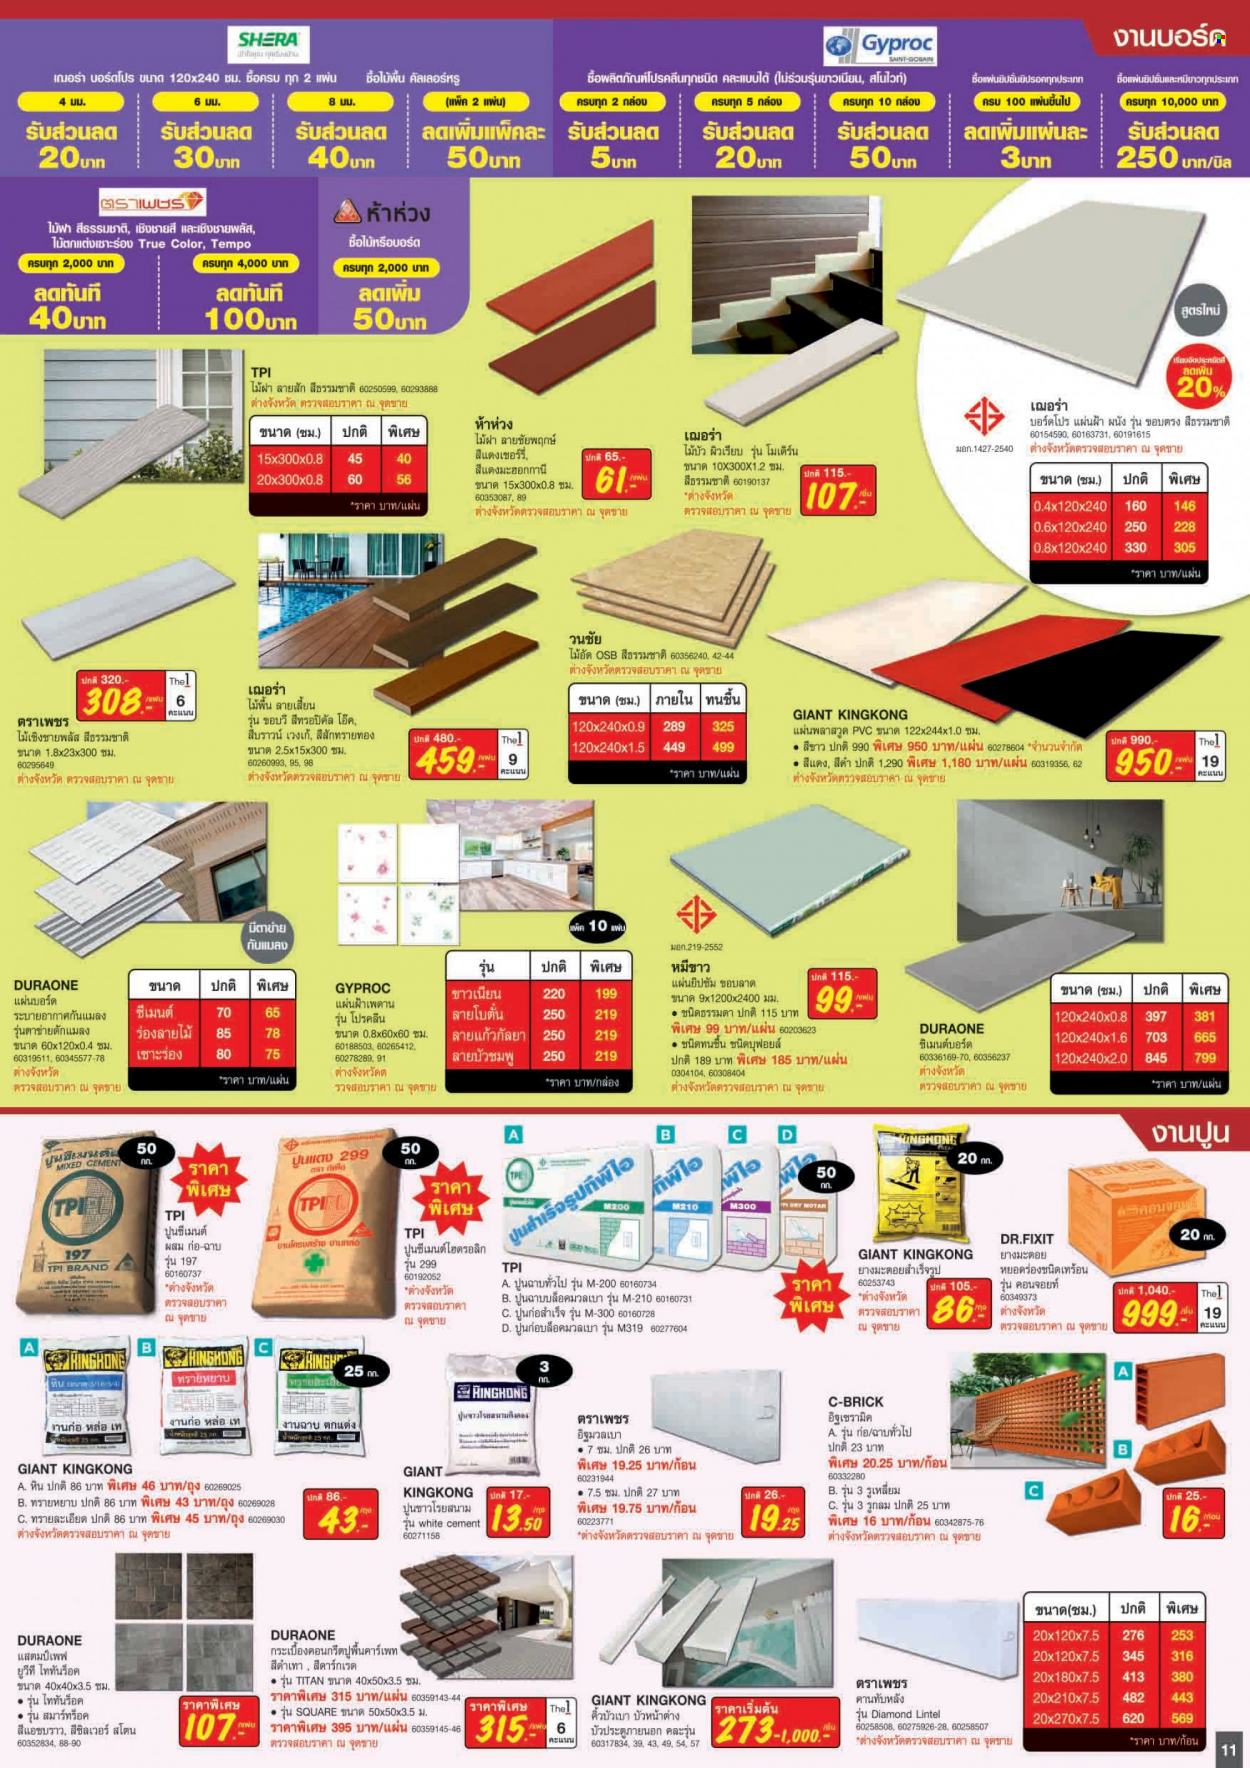 thumbnail - <retailer> - <MM/DD/YYYY - MM/DD/YYYY> - ขายสินค้า - ,<products from flyers>. หน้า 11.